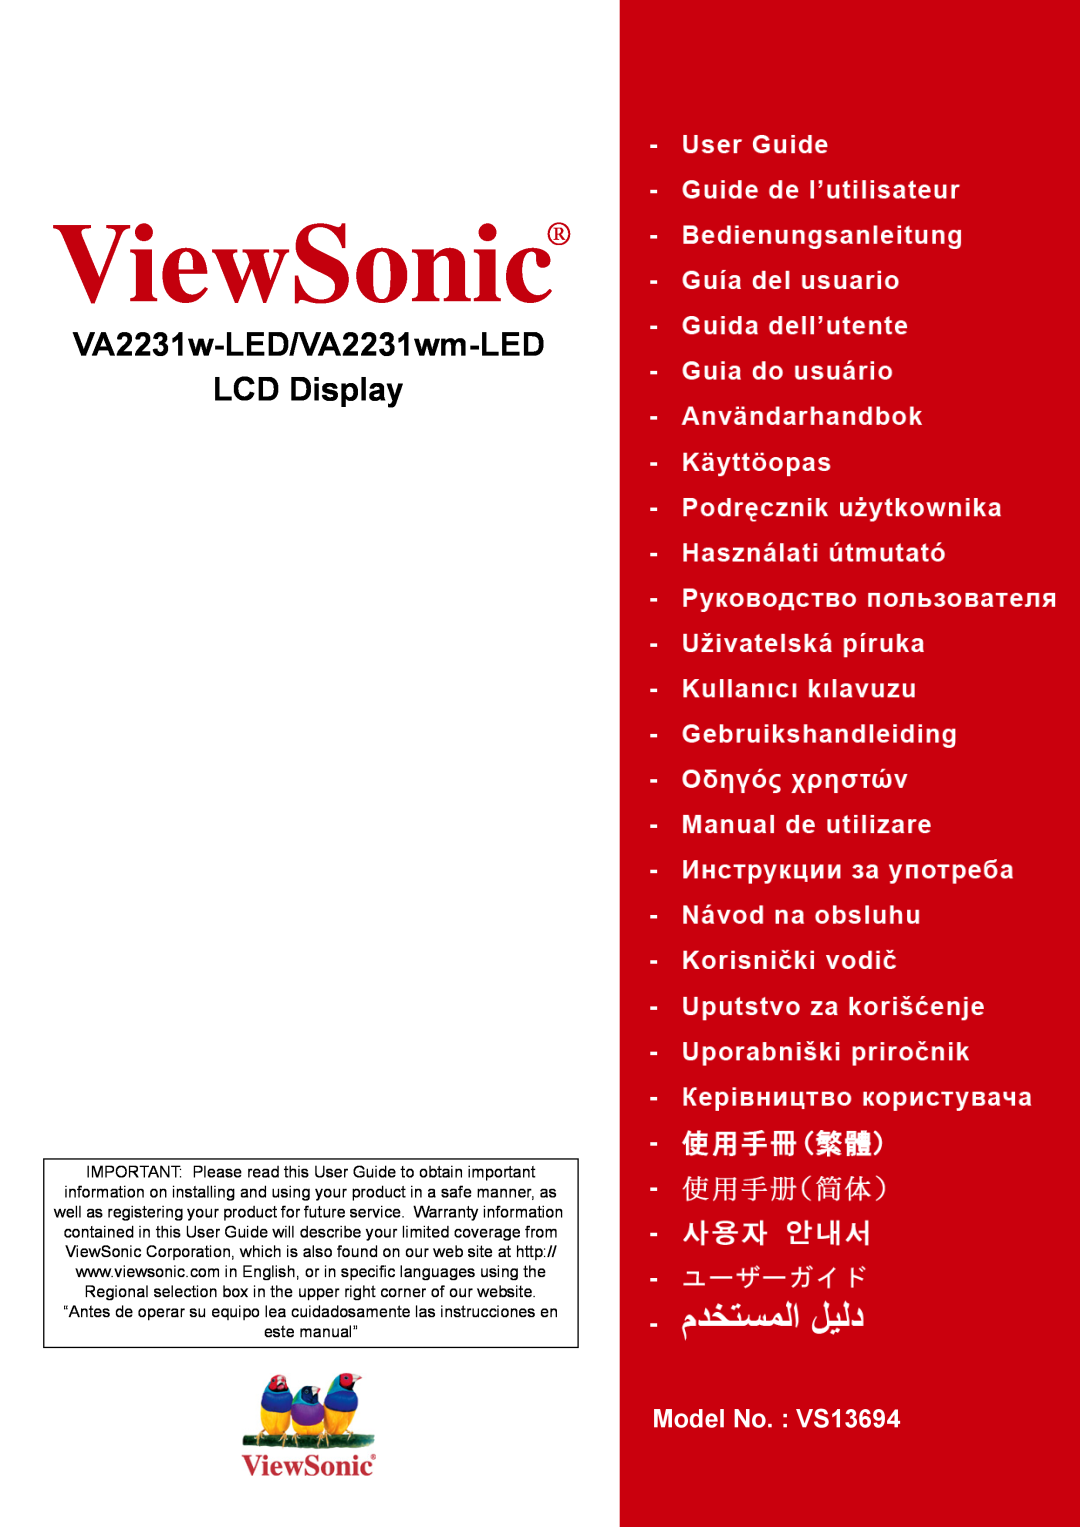 ViewSonic warranty VA2231w-LED/VA2231wm-LED LCD Display, ViewSonic, Model No. VS13694 